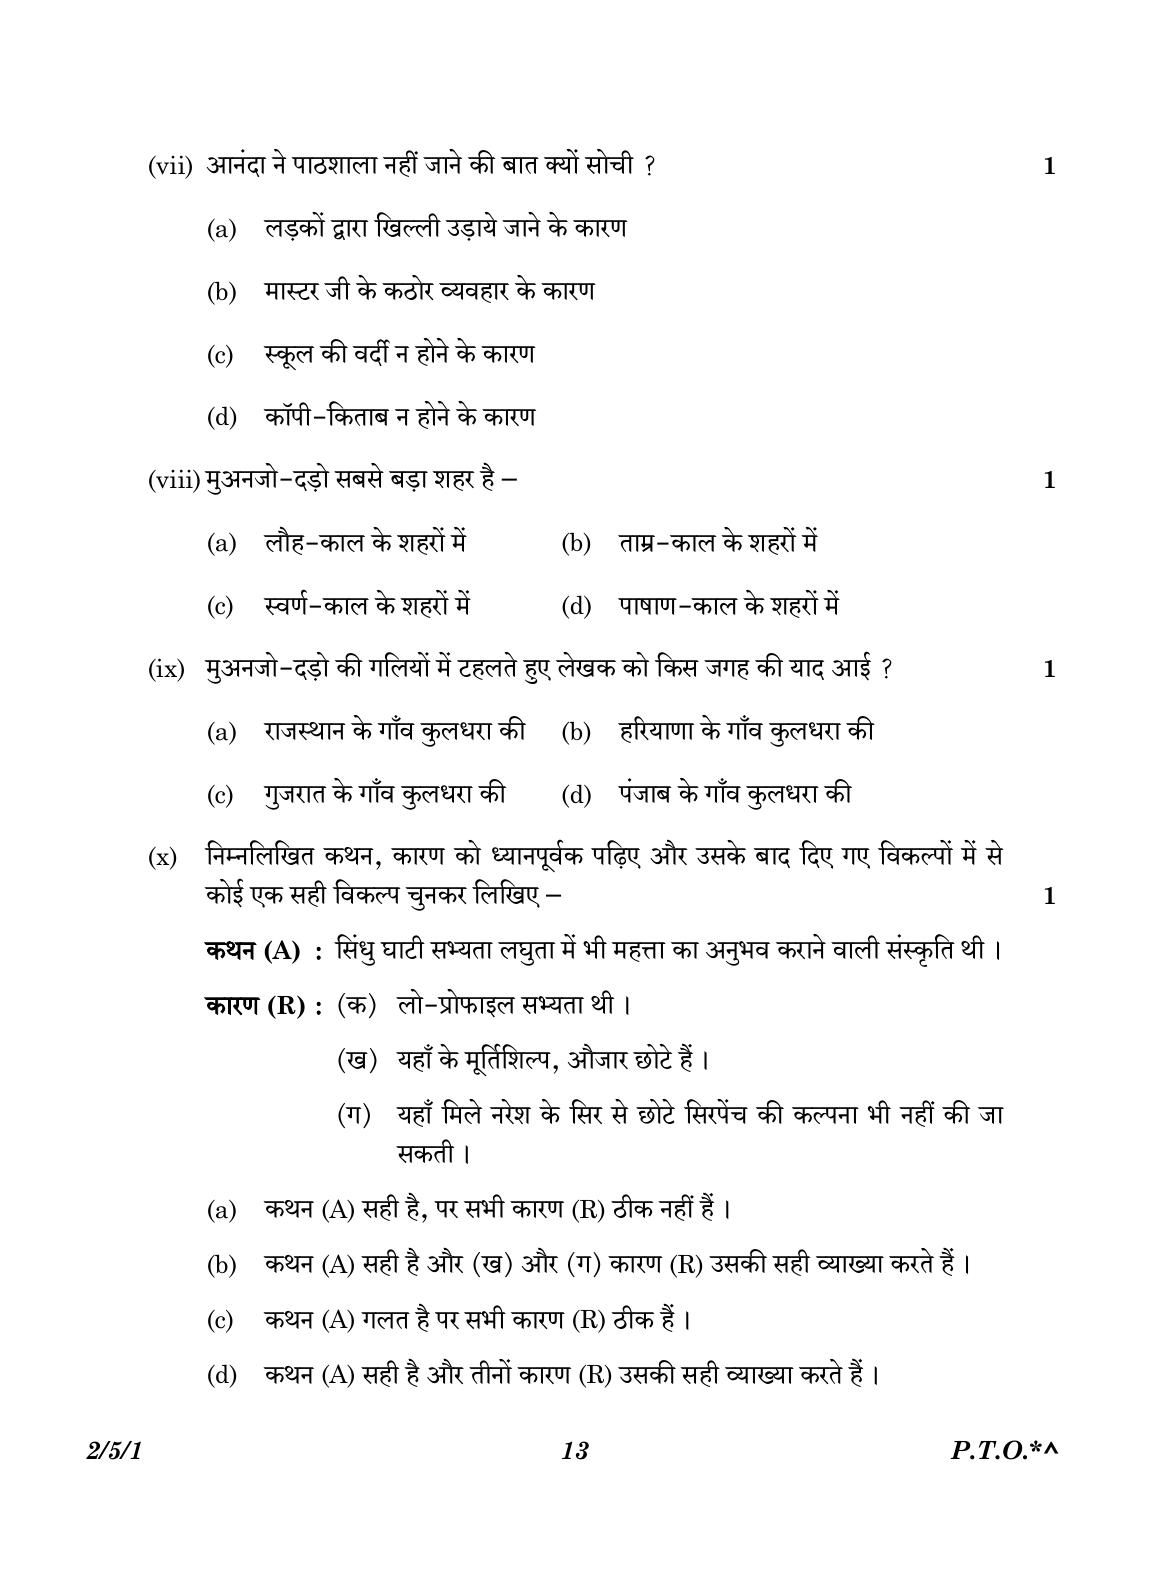 CBSE Class 12 2-5-1 Hindi Core version 2023 Question Paper - Page 13